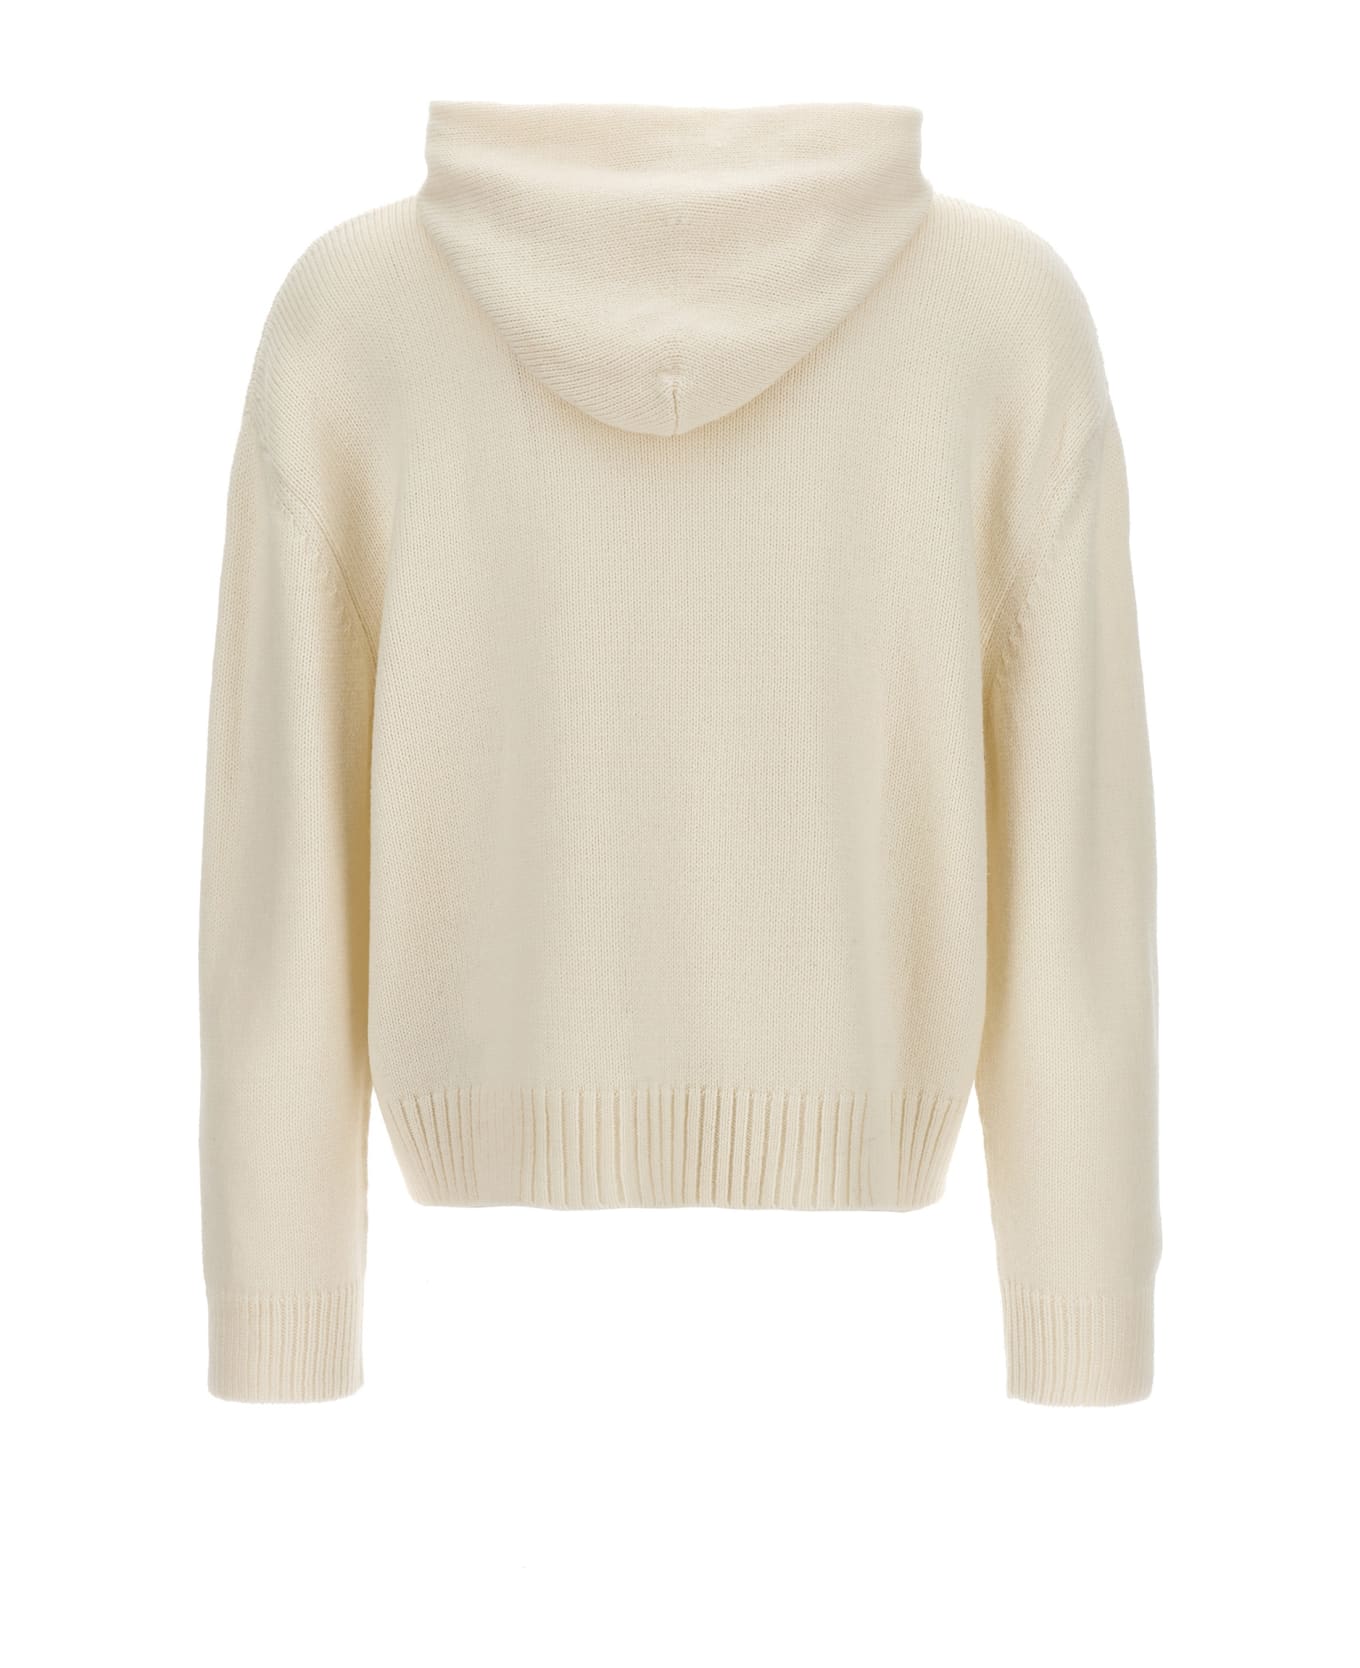 MM6 Maison Margiela Hooded Sweater - White/Black